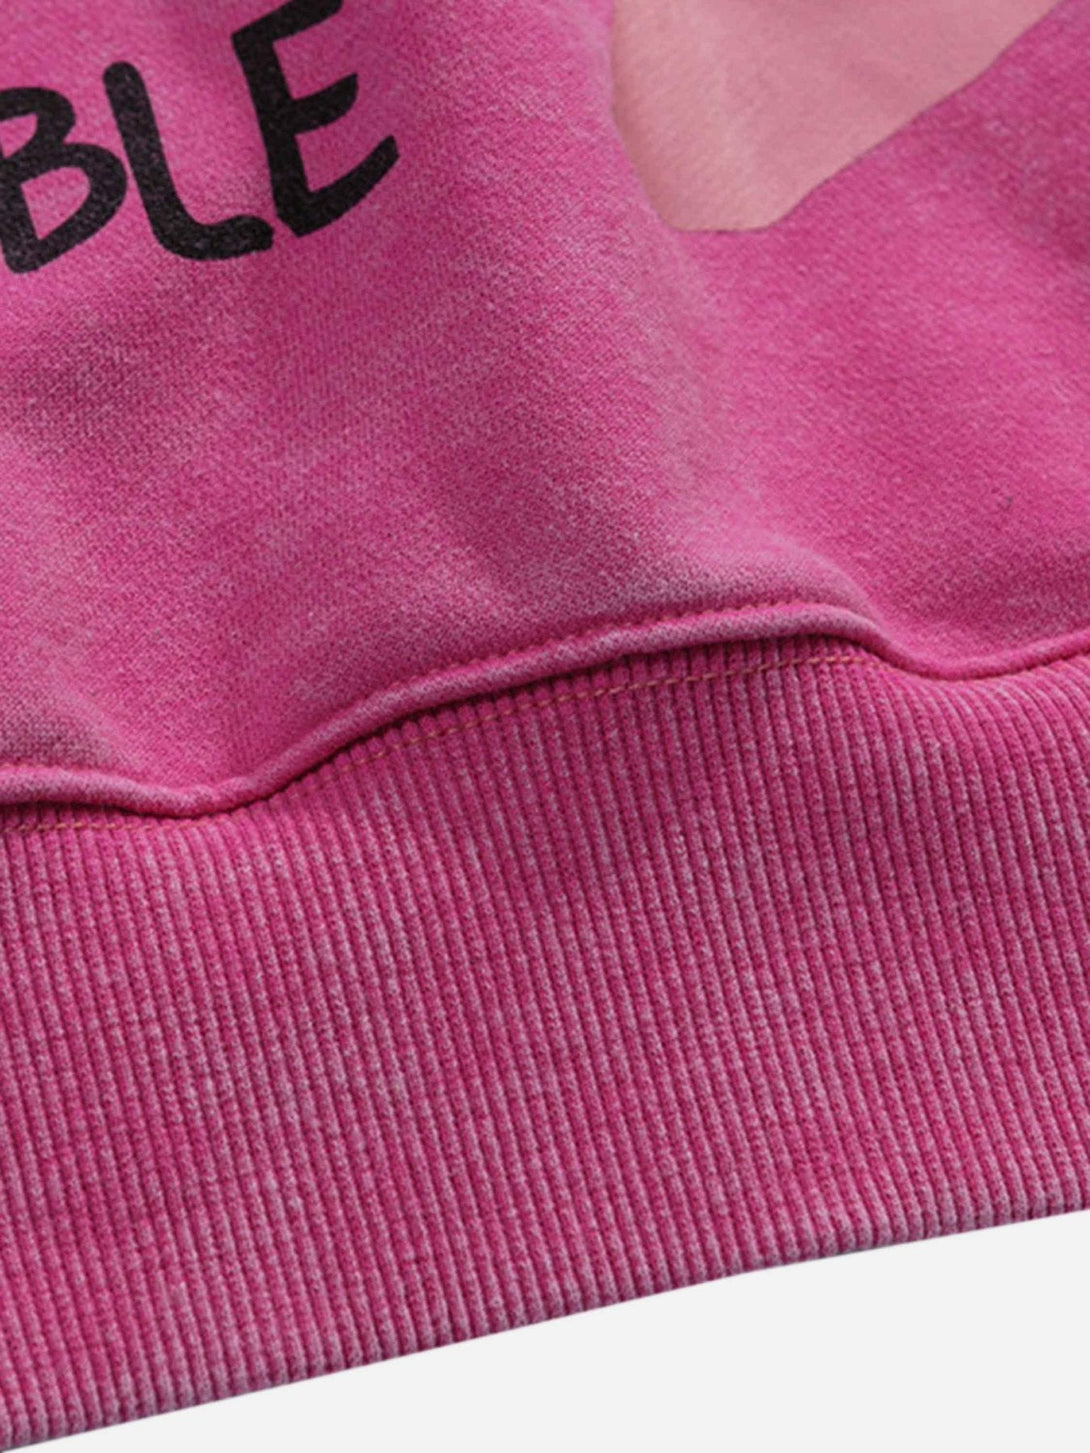 Majesda® - Alphabet Pentagram Print Hooded Sweatshirt- Outfit Ideas - Streetwear Fashion - majesda.com